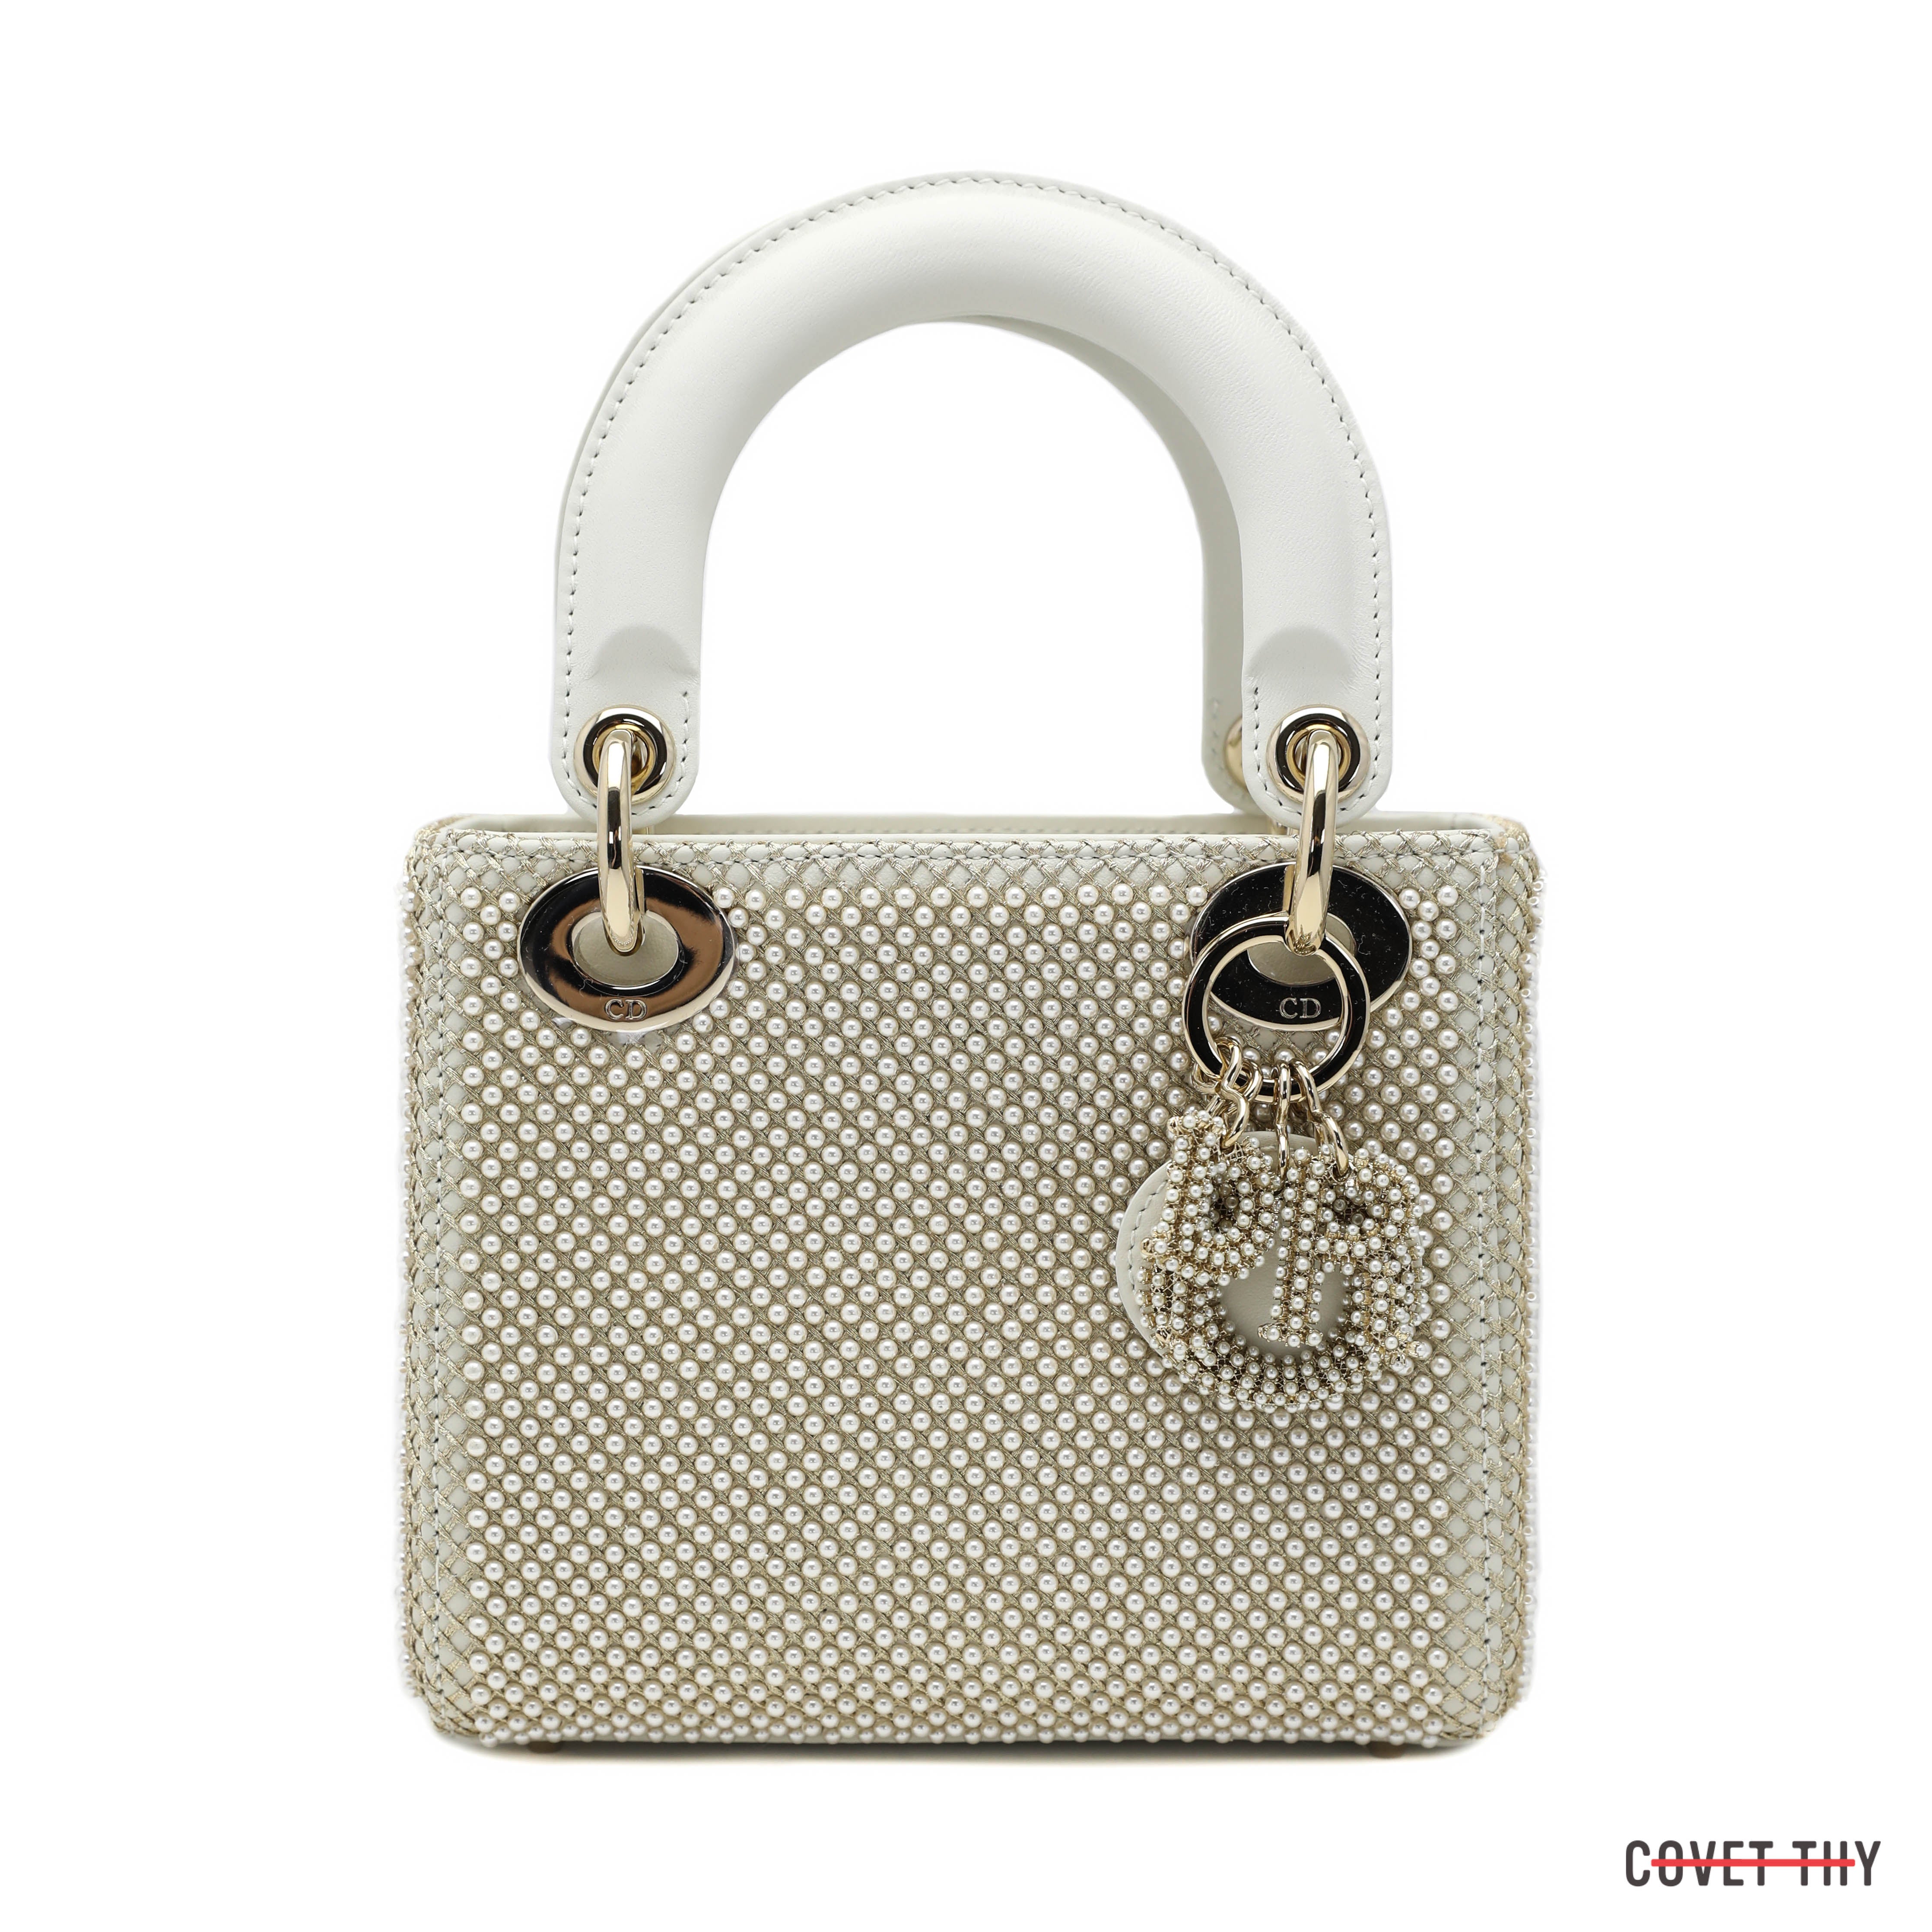 Lady Dior Limited Edition Mini Pearl Handbag